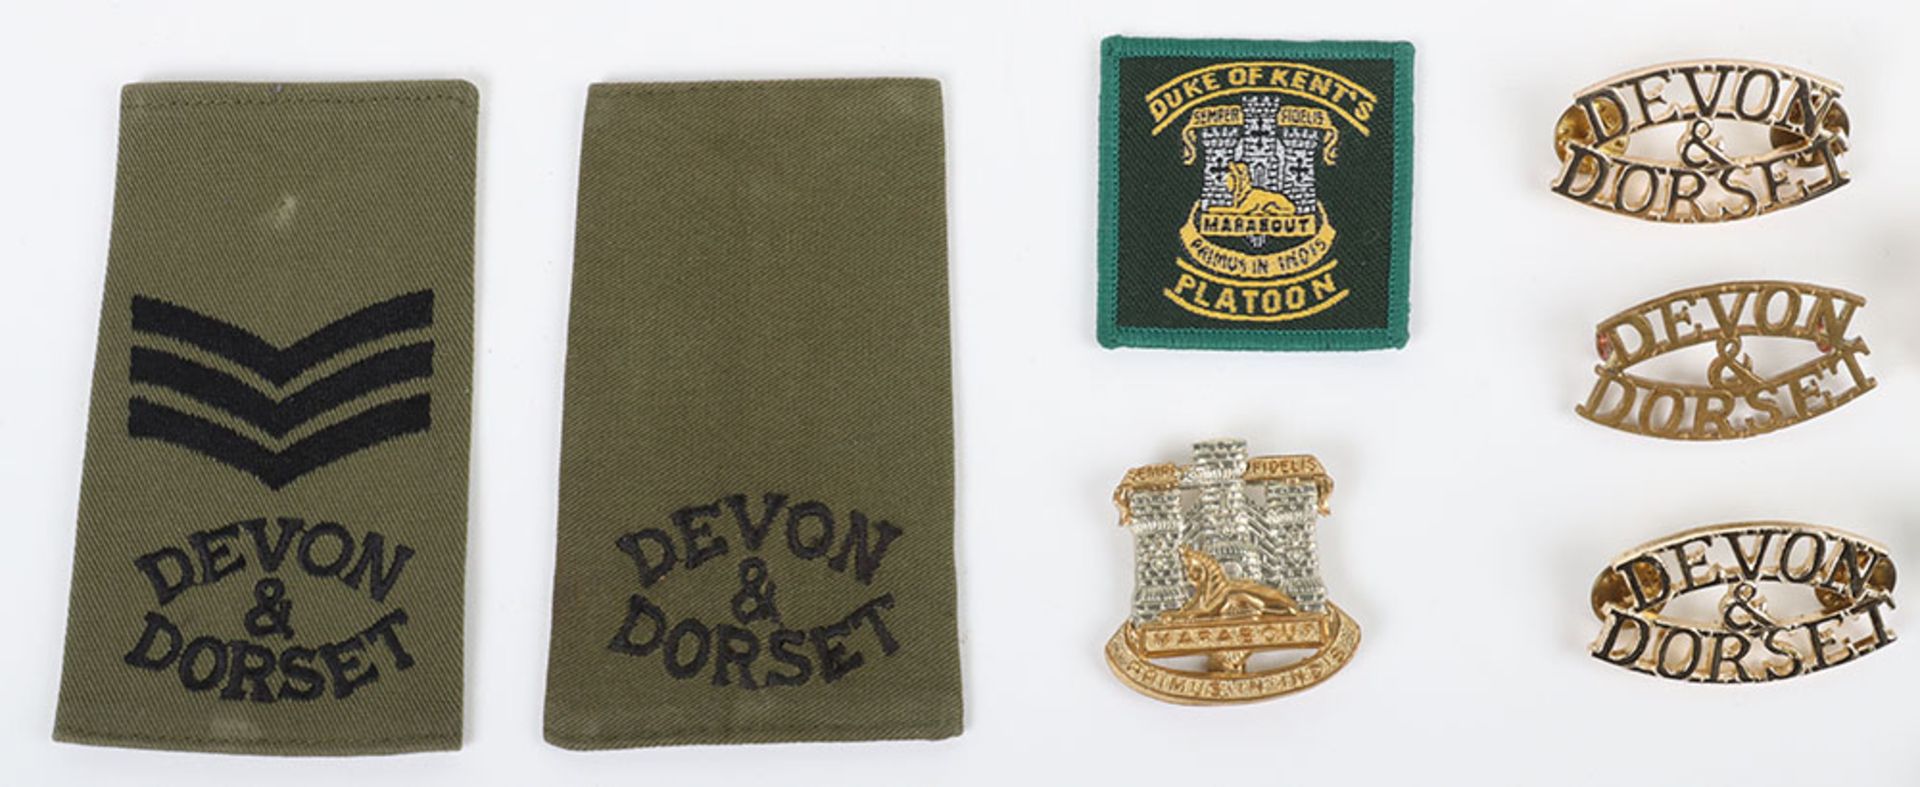 Grouping of Devon & Dorsetshire Regiment Badges, - Image 4 of 6